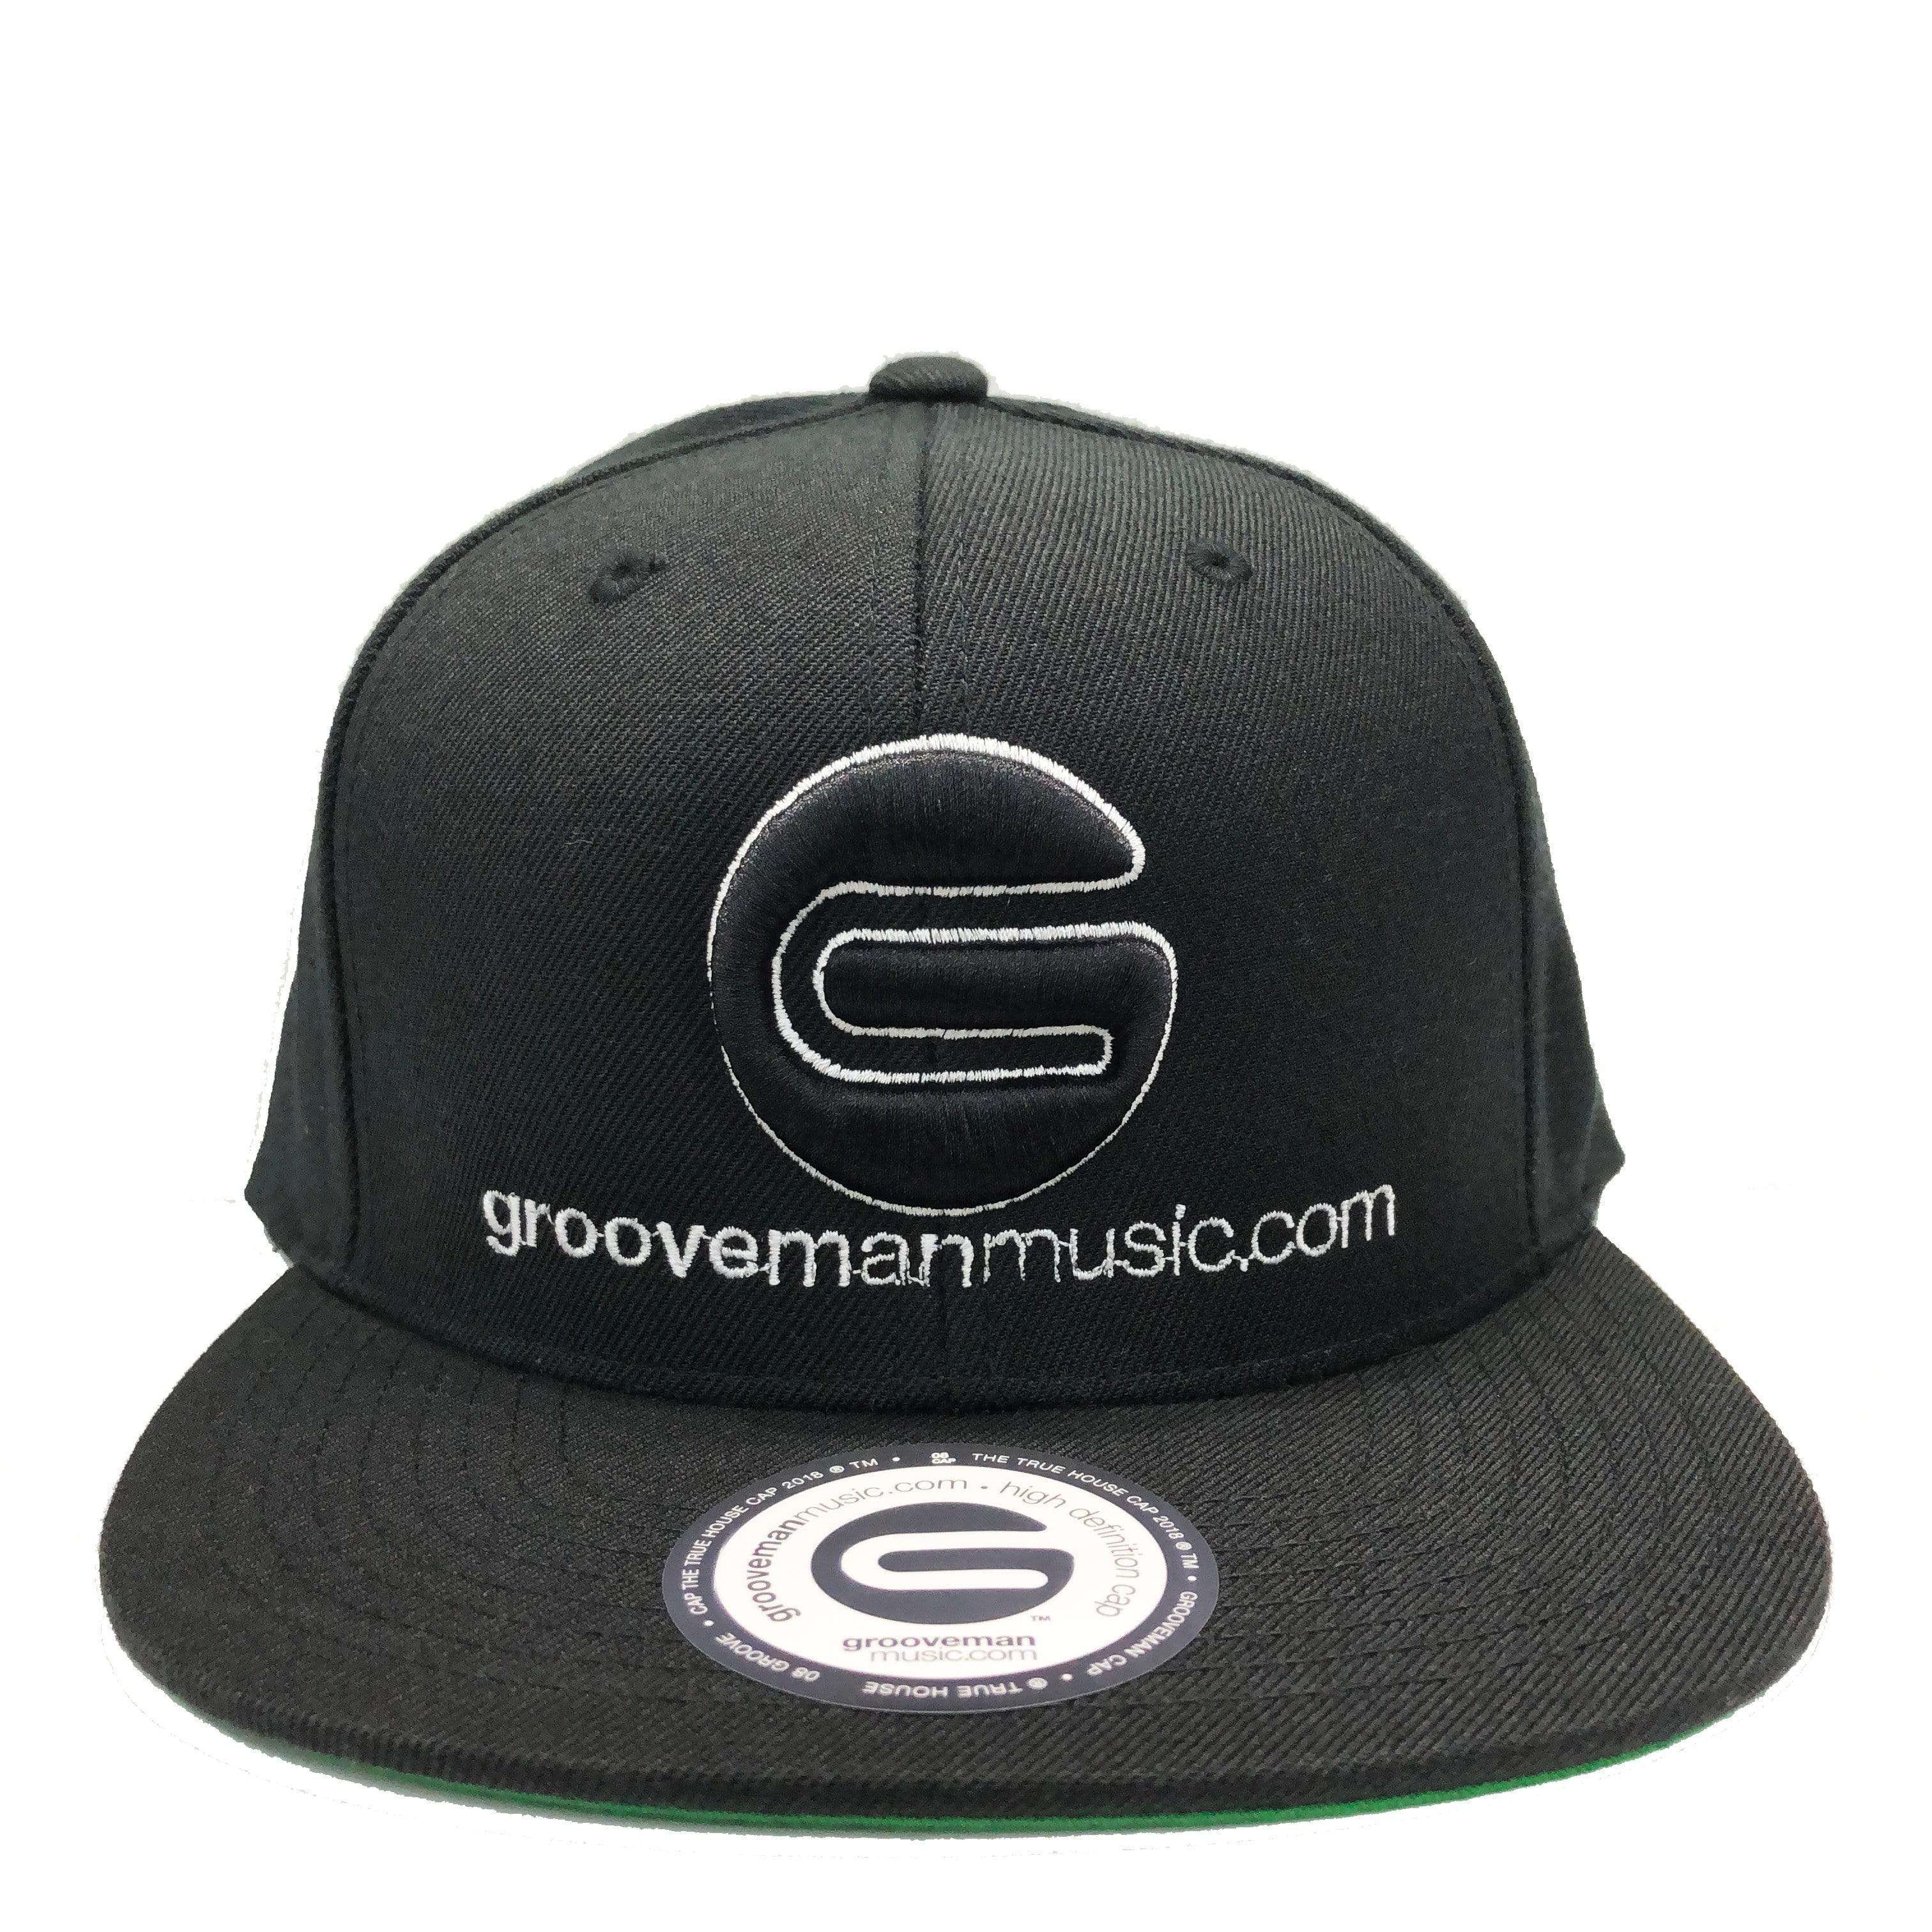 Grooveman Music Hats One Size / Black White Grooveman Snapback